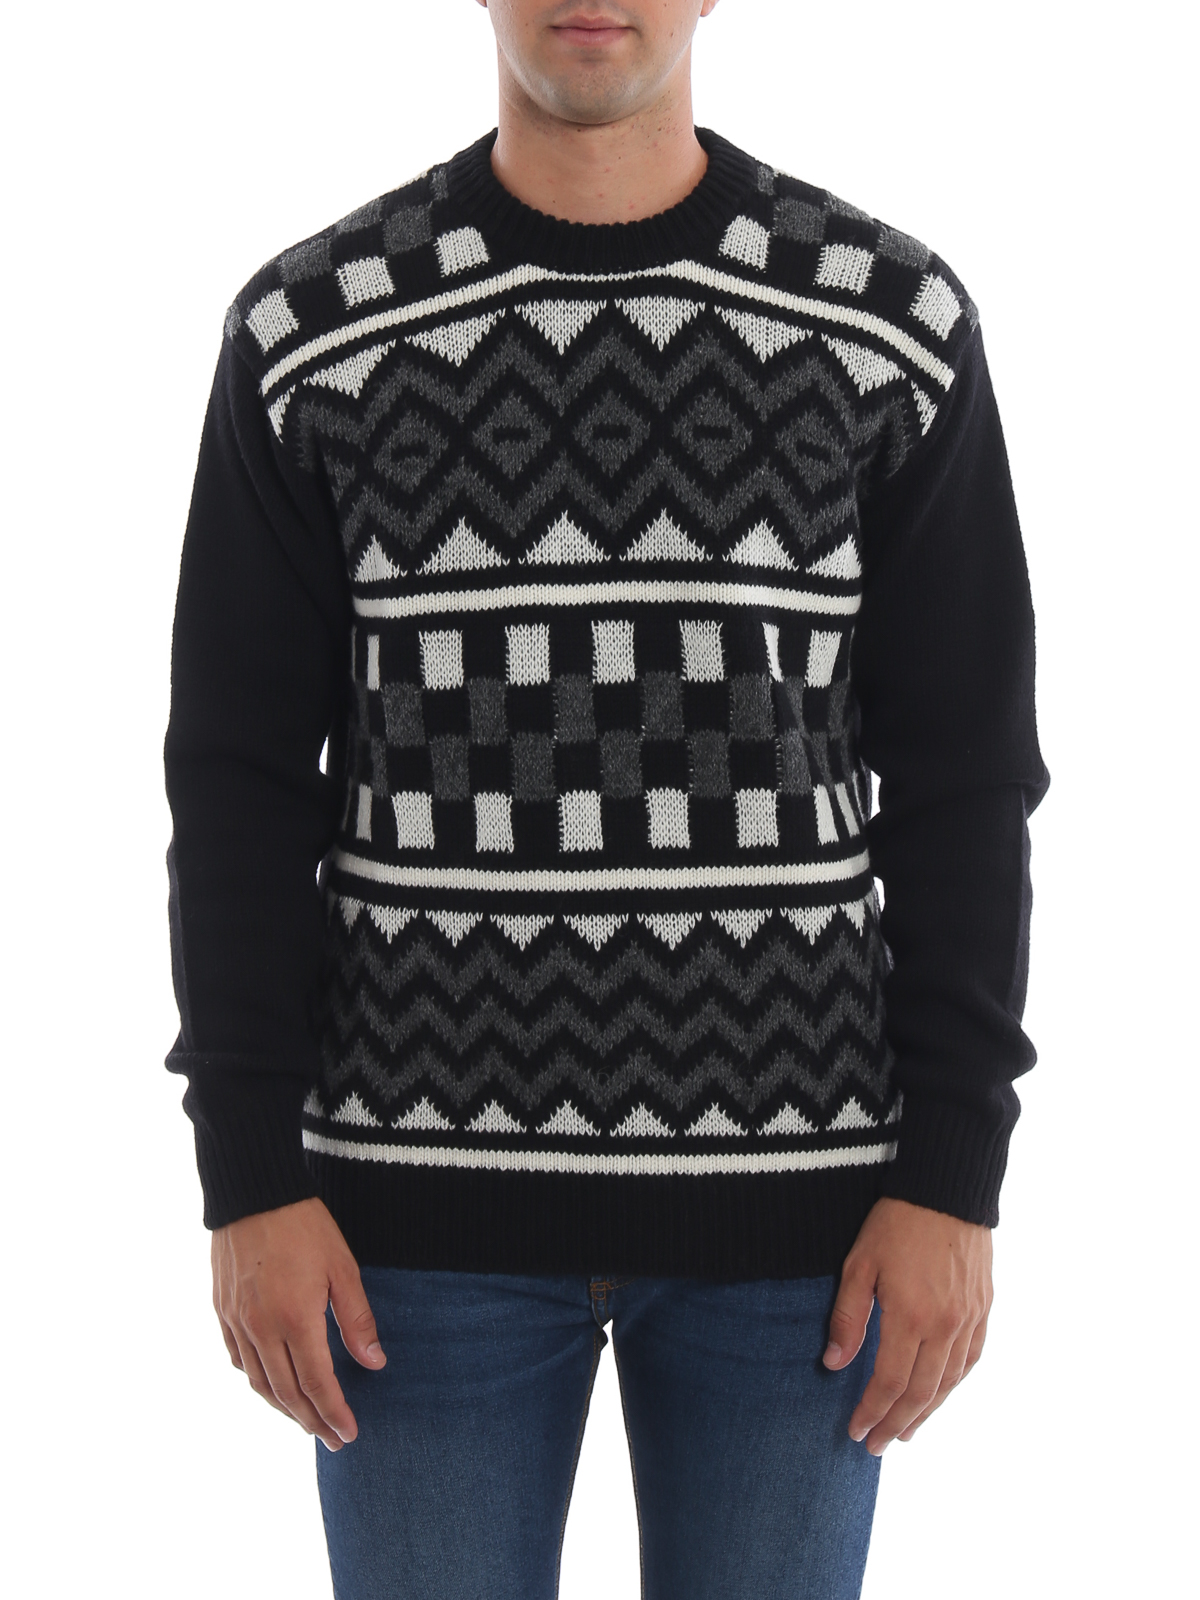 Crew necks Prada - Damier black and white intarsia wool sweater -  UMA8091CIOXCQ